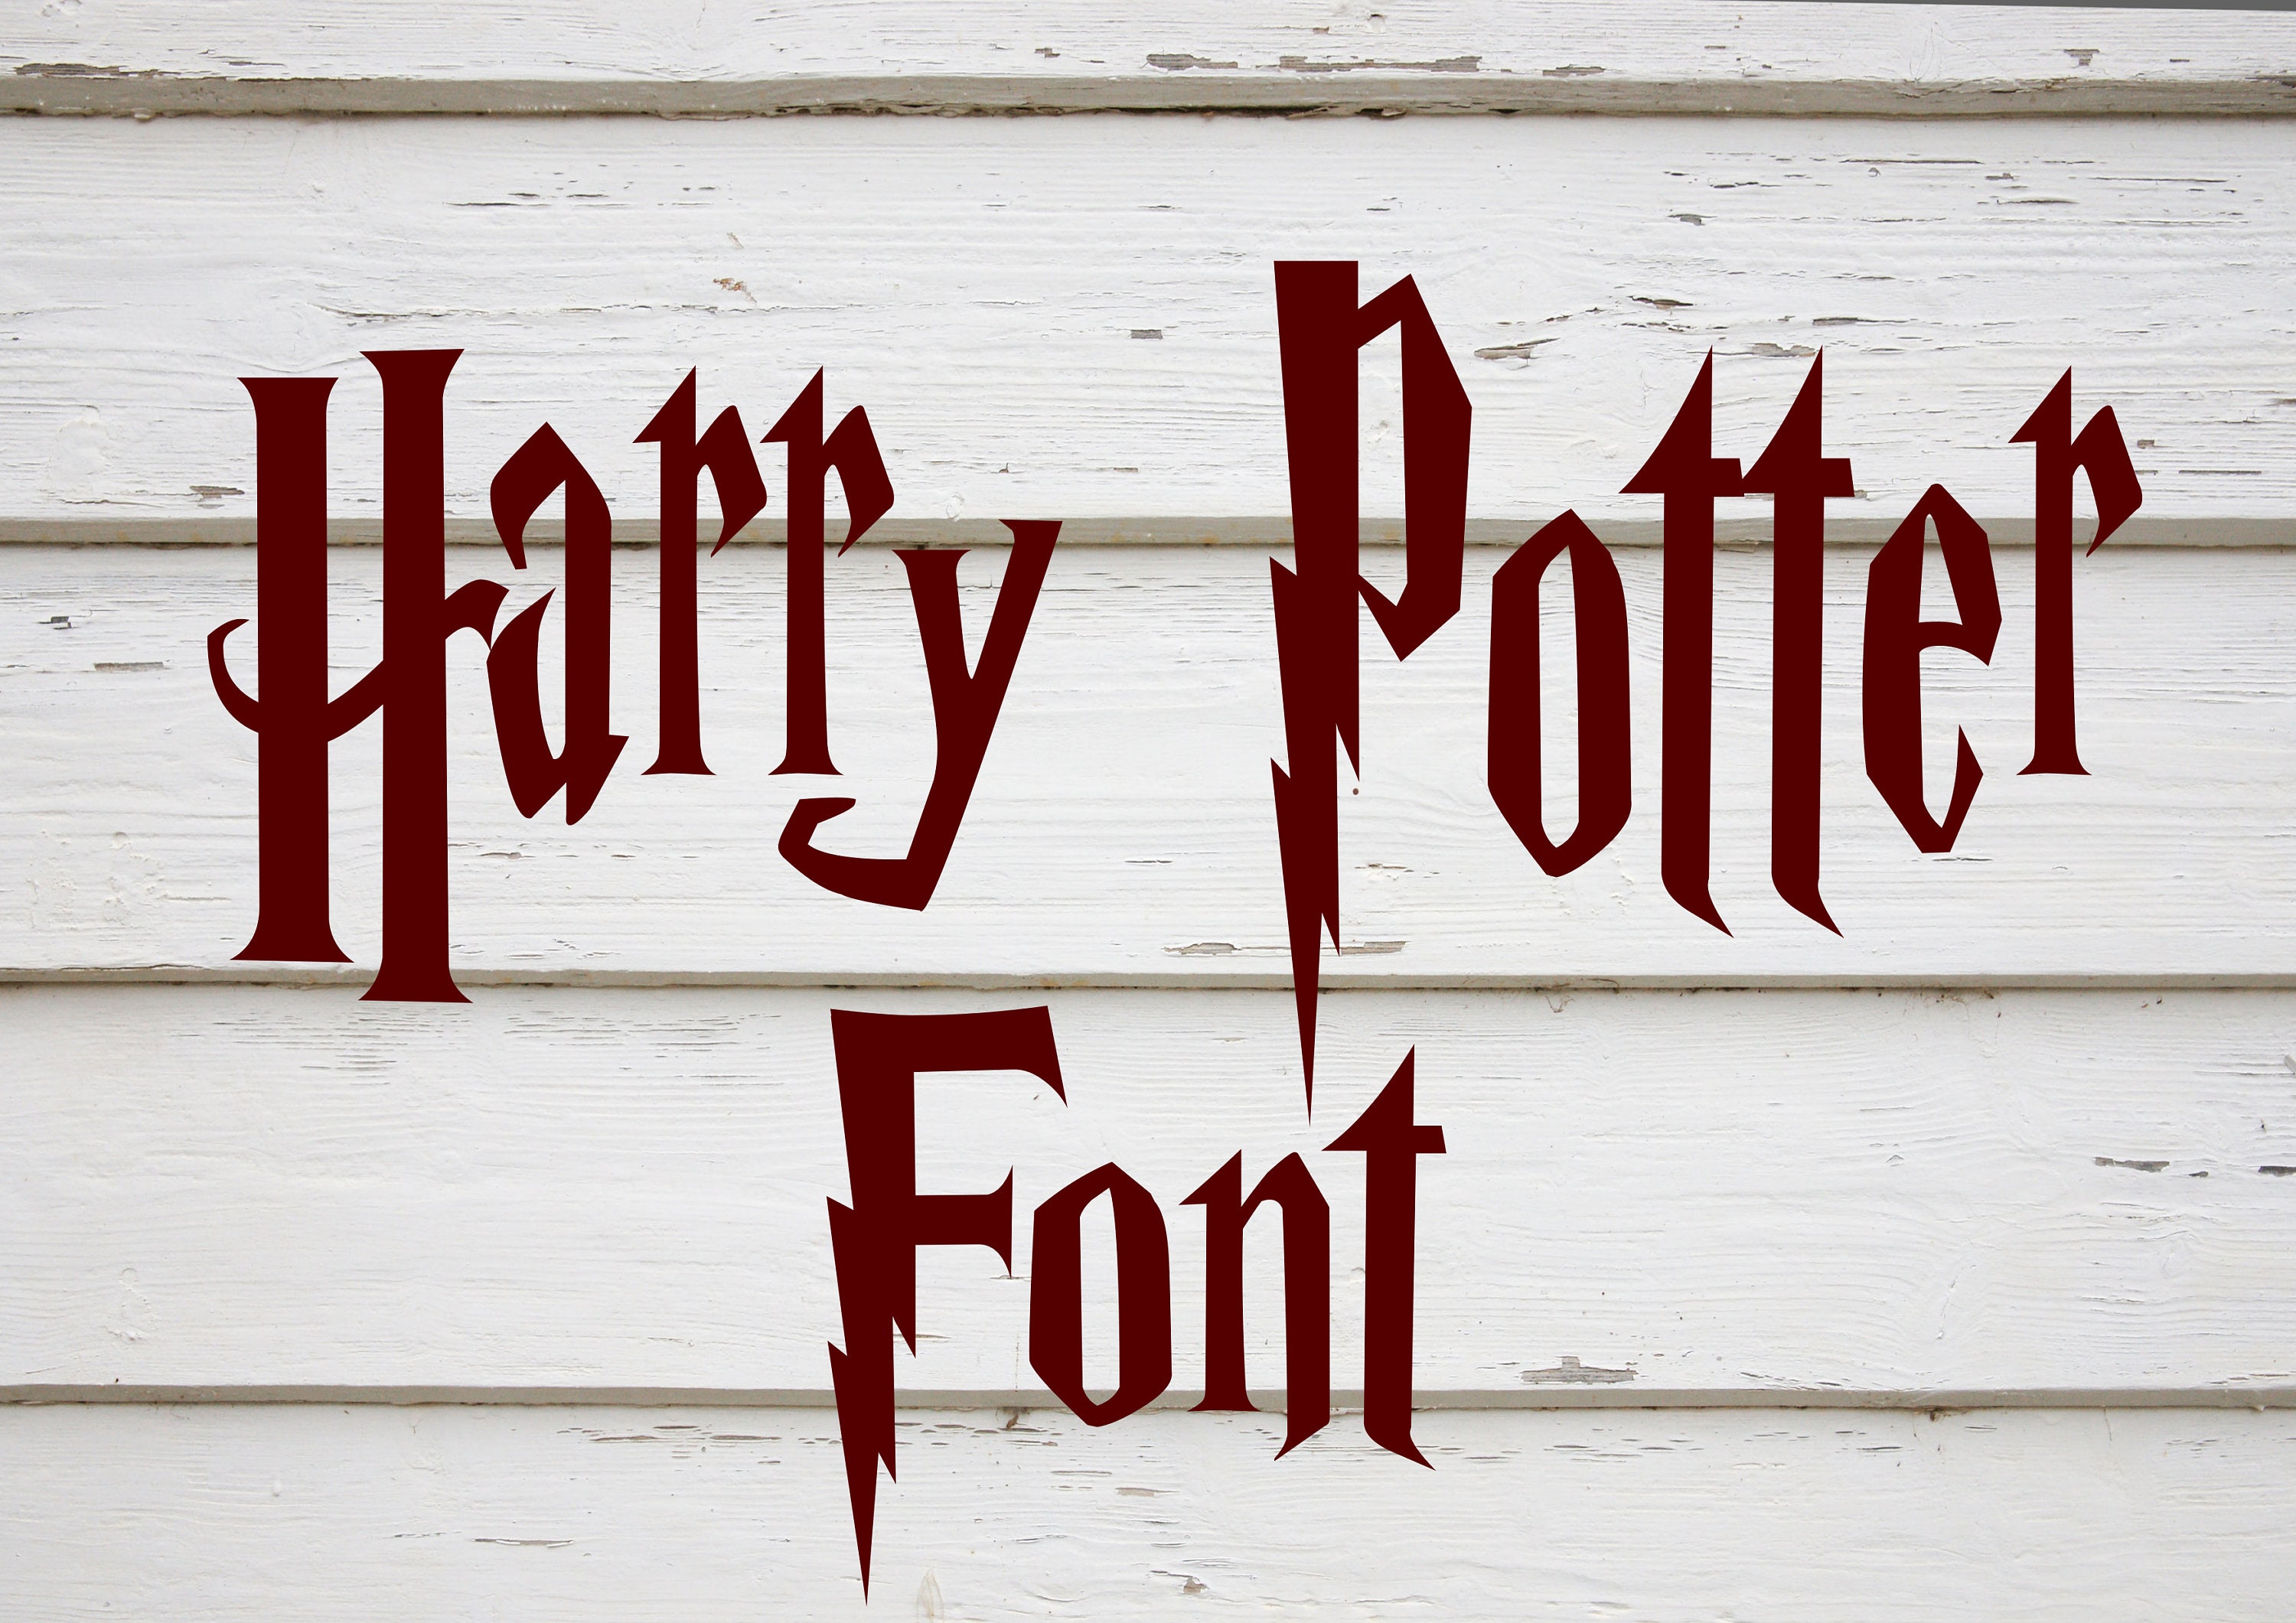 Free SVG Harry Potter Svg Font 11351+ File for Silhouette